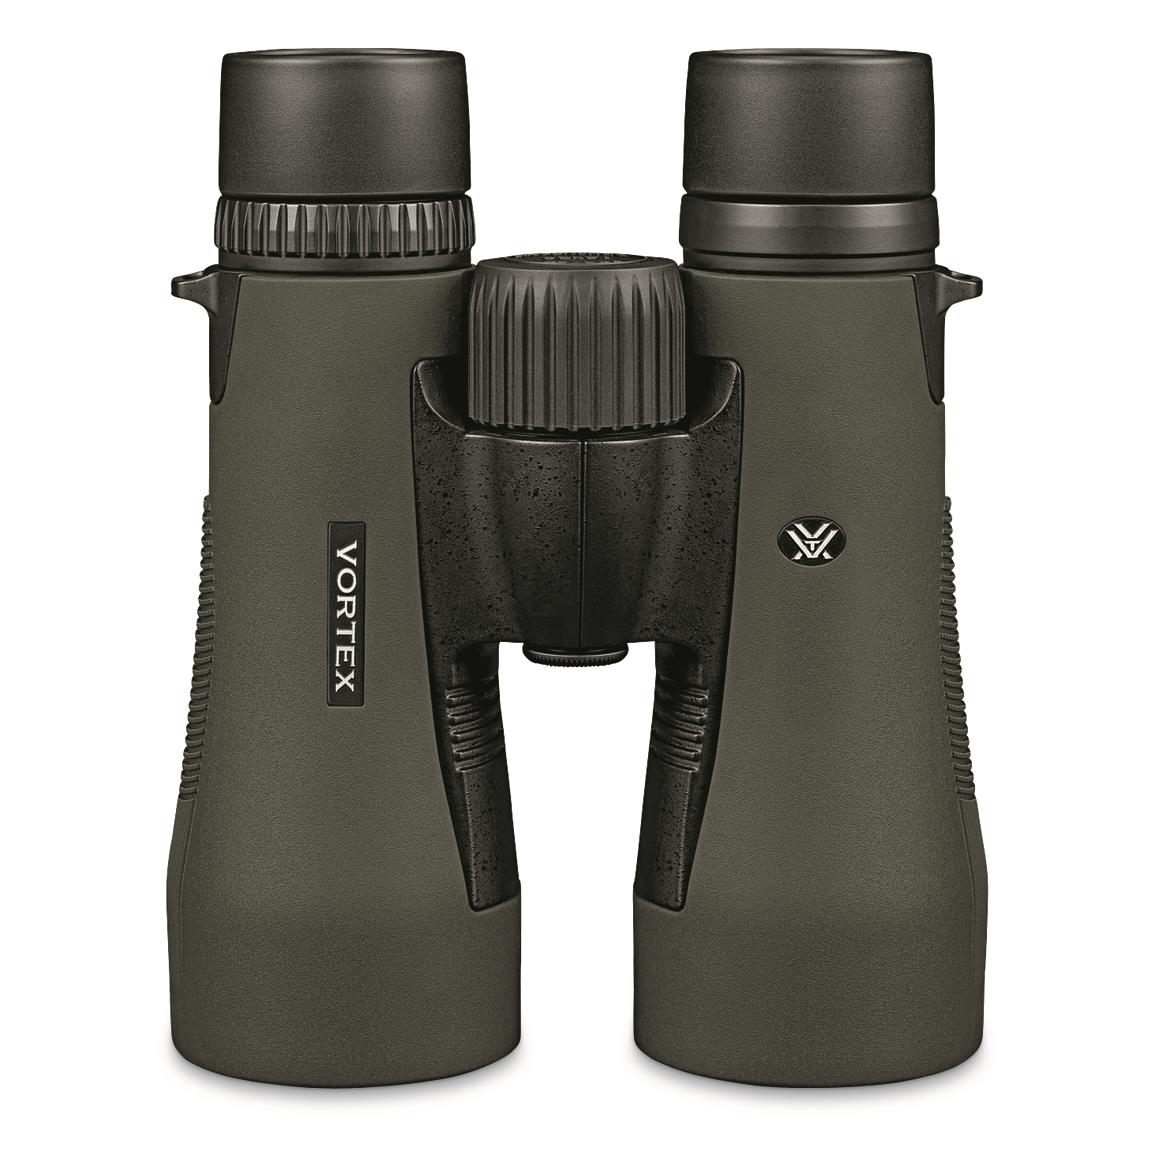 Vortex Diamondback HD 12x50mm Binoculars